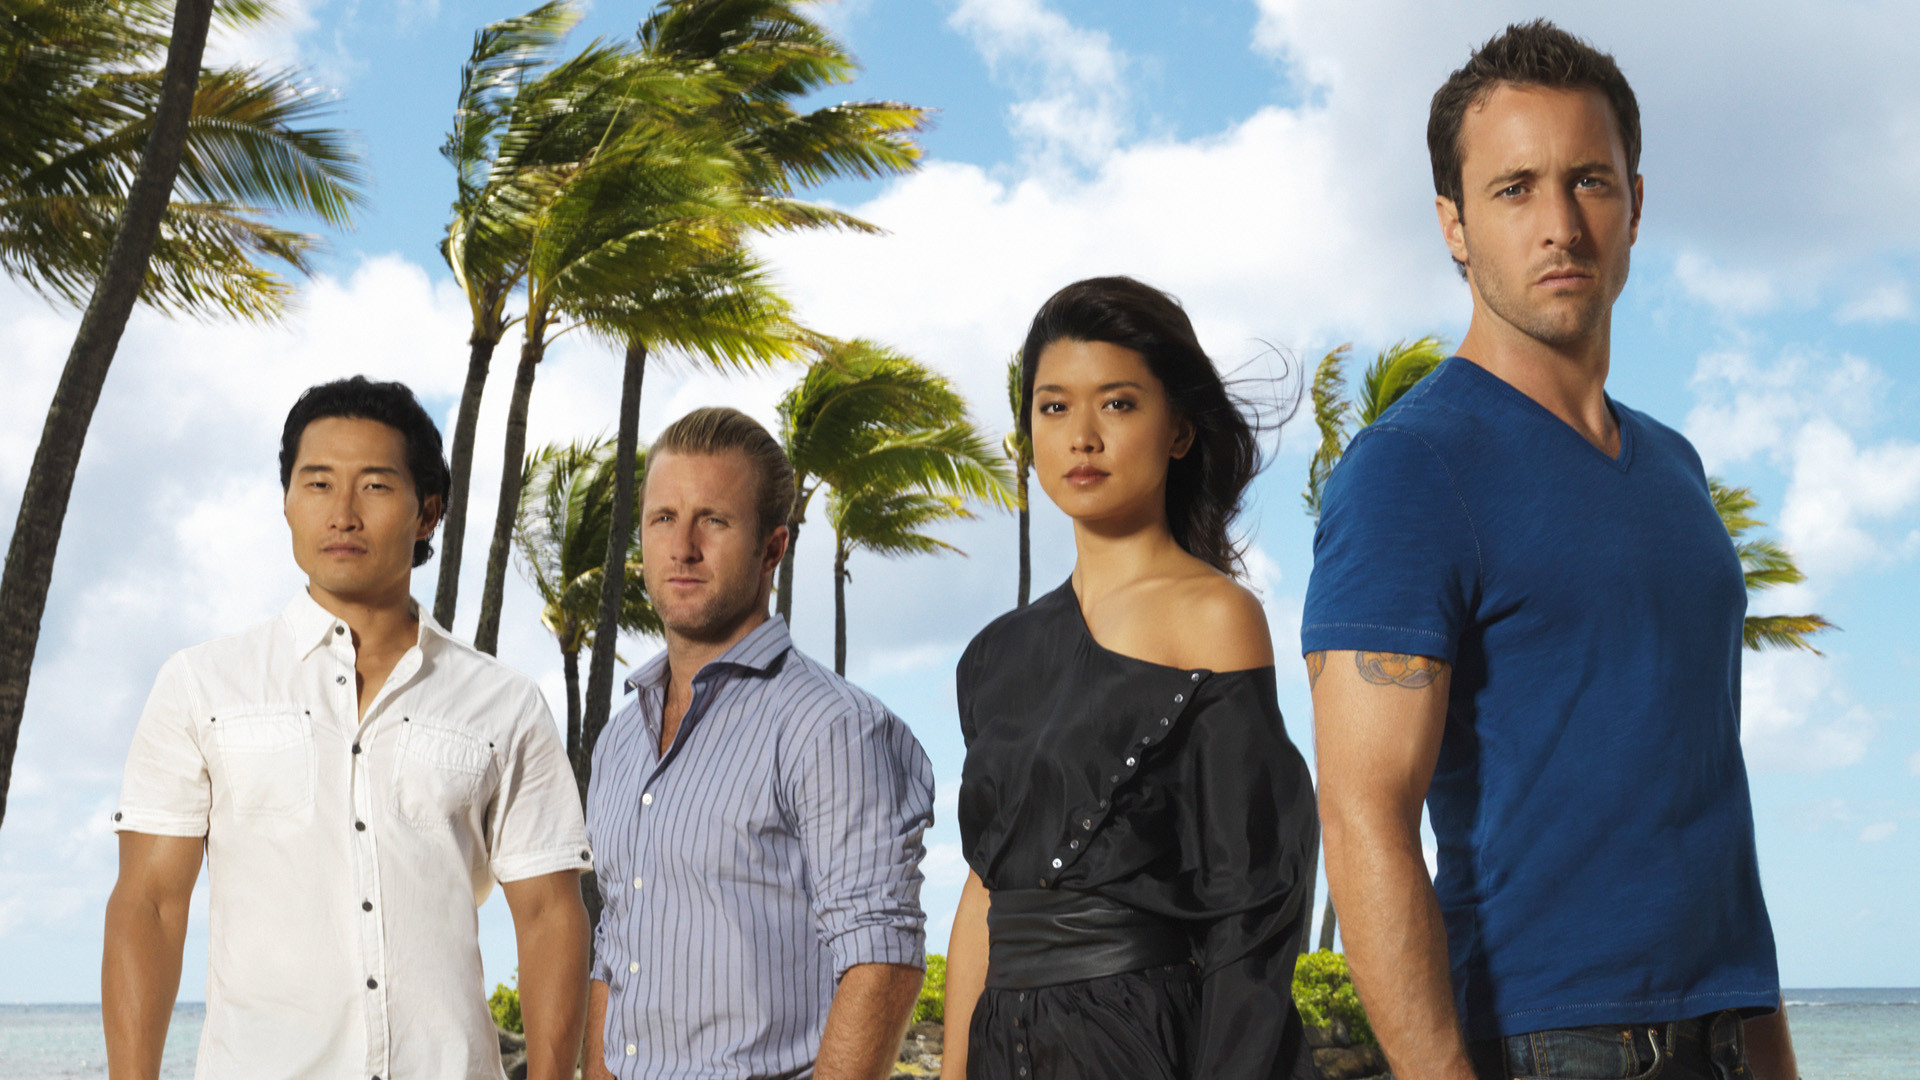 TV Show Hawaii Five-0 HD Wallpaper | Background Image